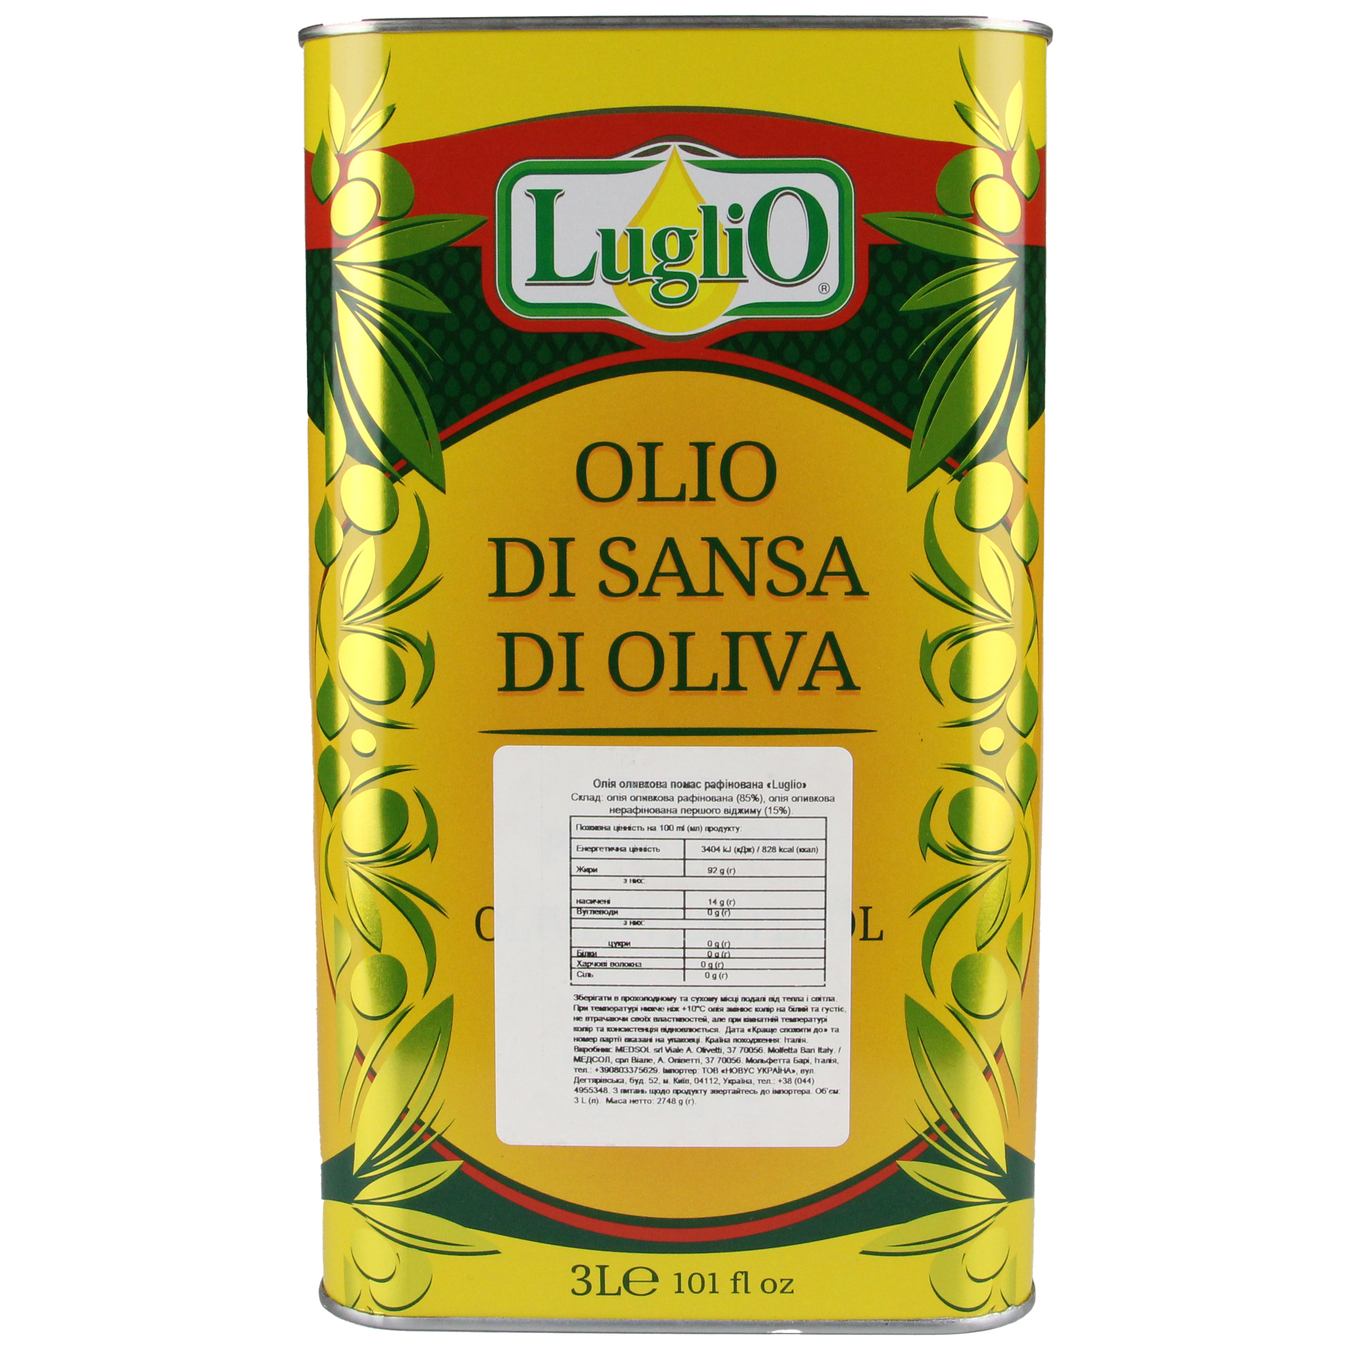 Luglio Rafinated Pomace Olive Oil 3l iron can 2